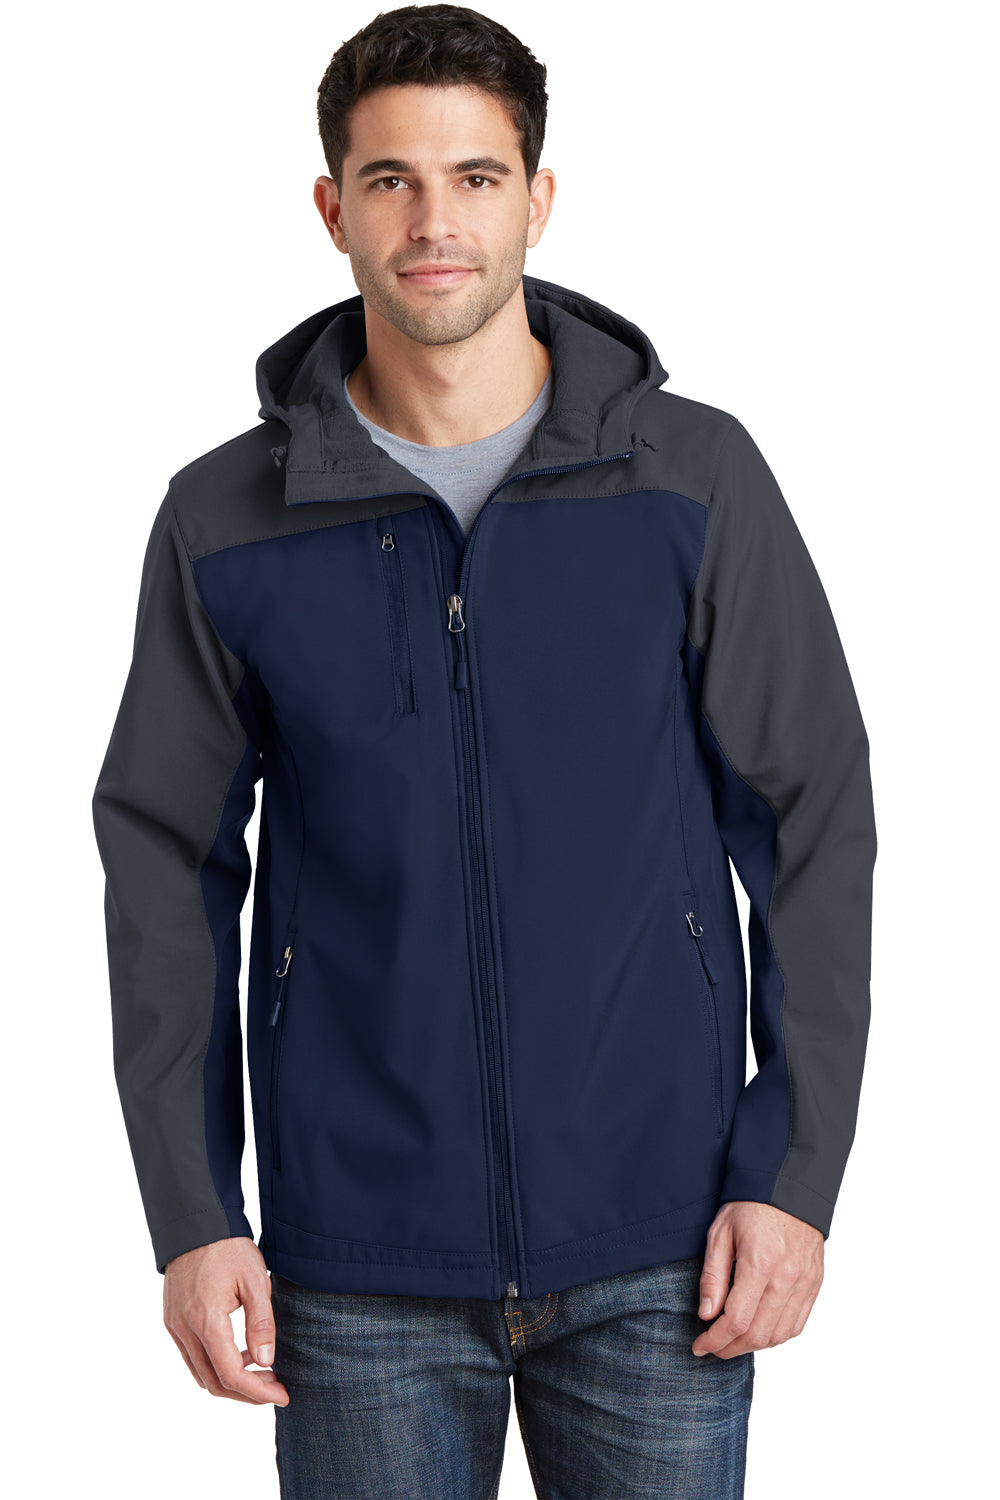 Port Authority J335 Mens Core Wind & Water Resistant Full Zip Hooded Jacket Navy Blue/Grey Front